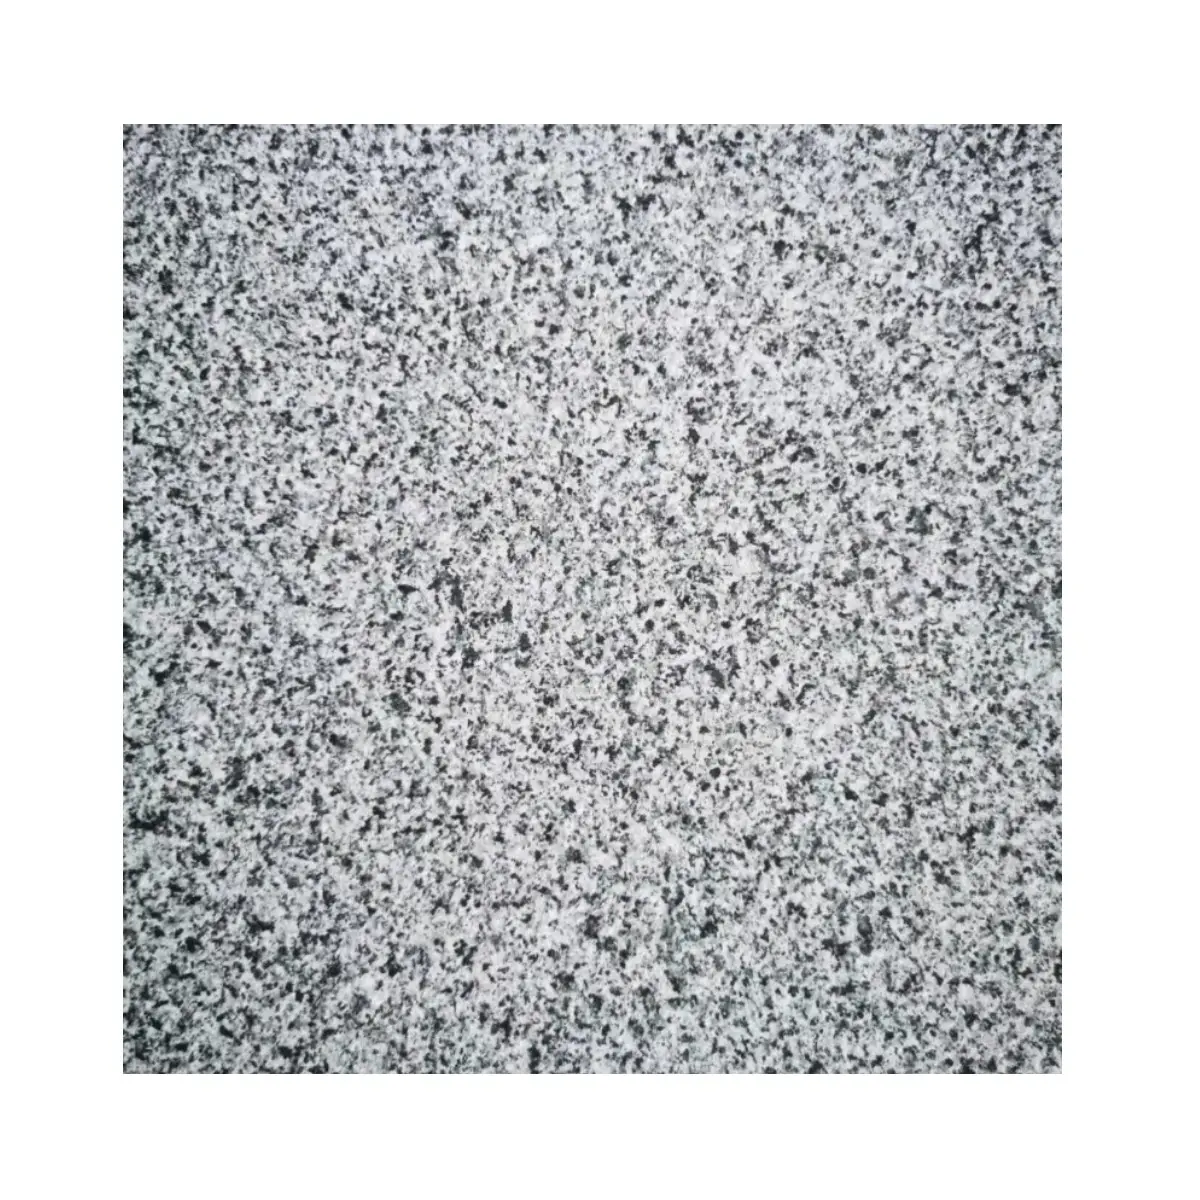 Flamed Dark Grey China cheap Granite Floor Tiles and slabs, Dark grey granite Bluestone Pavers For Outside Flooring